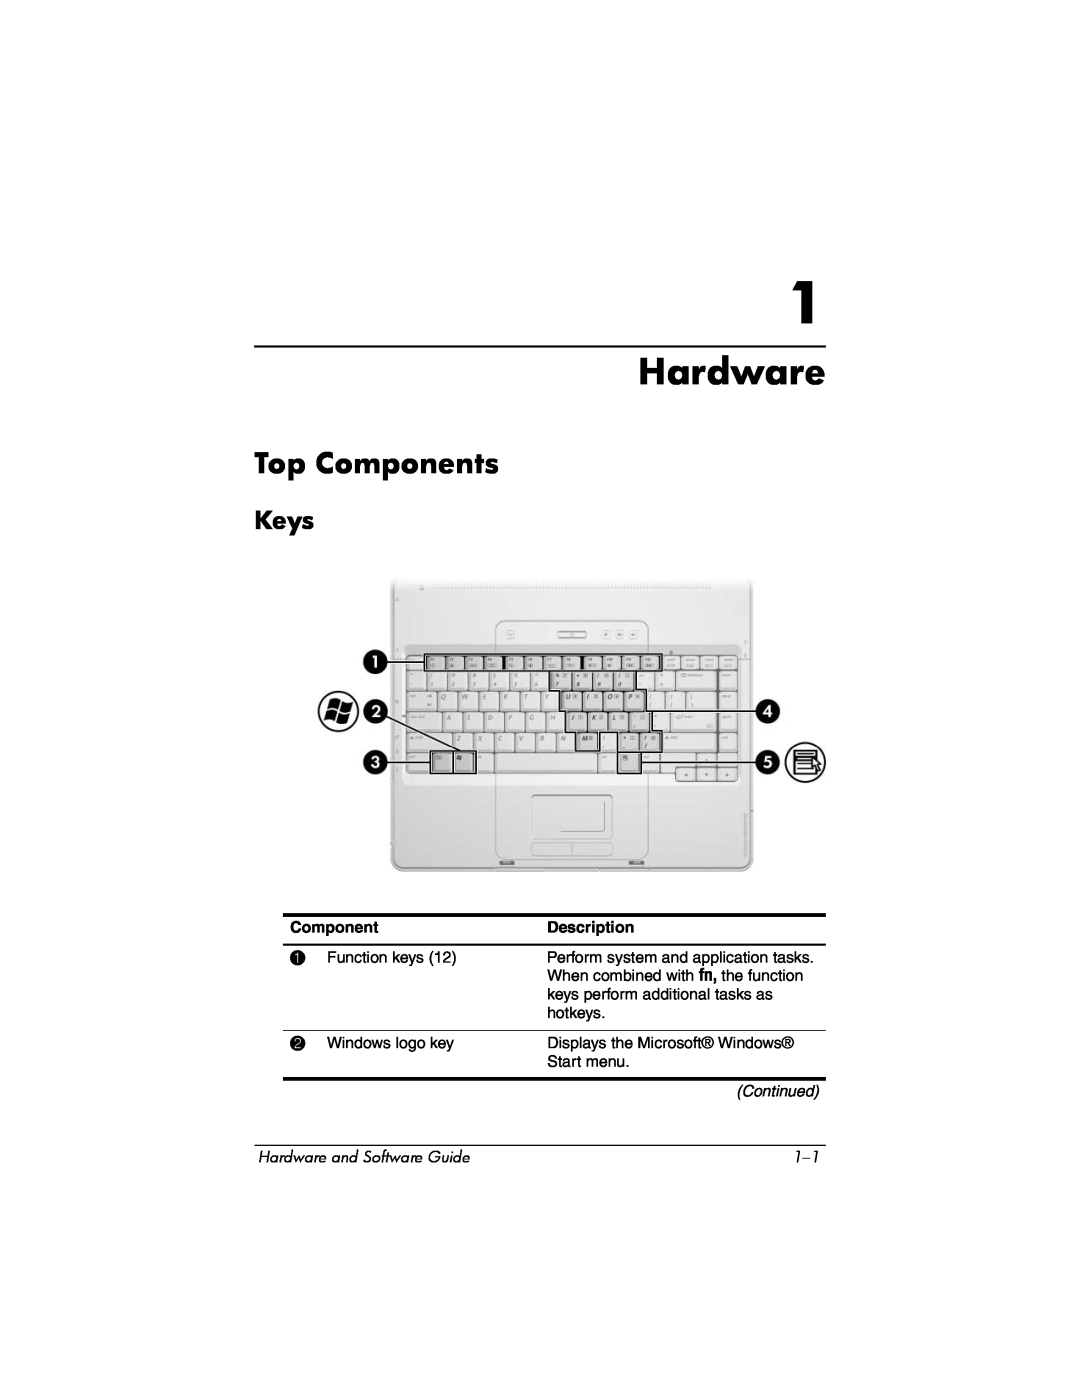 Compaq Presario M2000 manual Hardware, Top Components, Keys, Description 